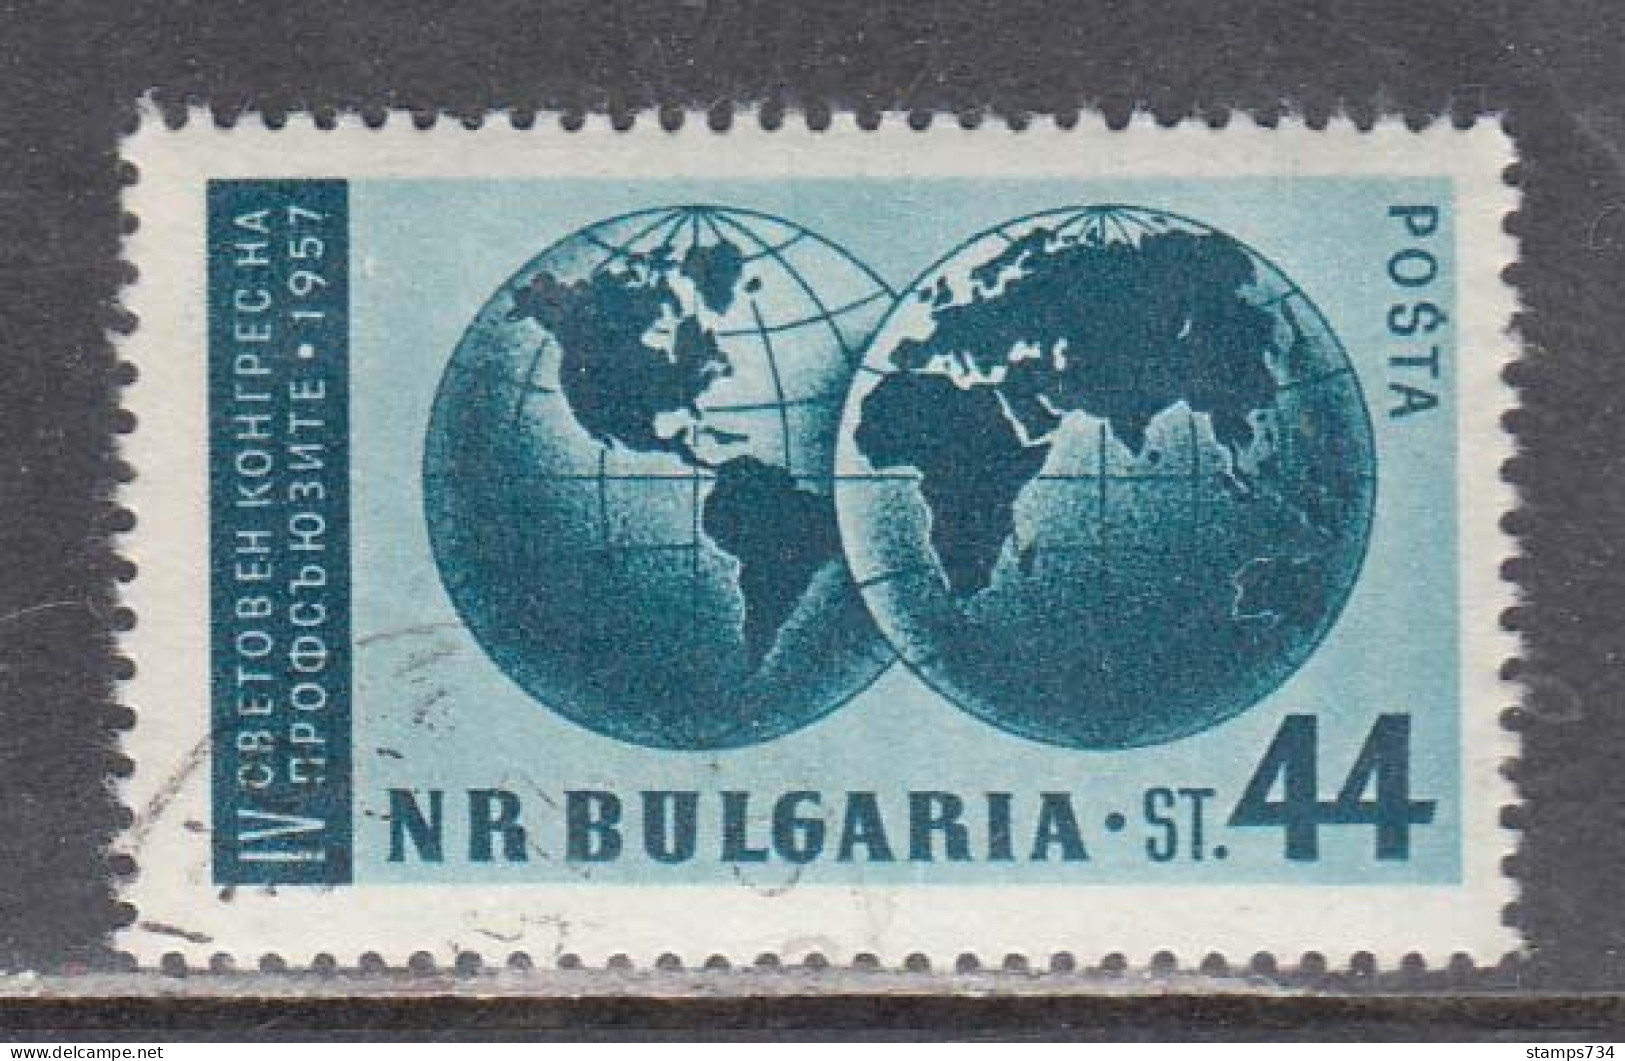 Bulgaria 1957 - Trade Union Congress, Leipzig, Mi-Nr. 1040, Used - Gebraucht